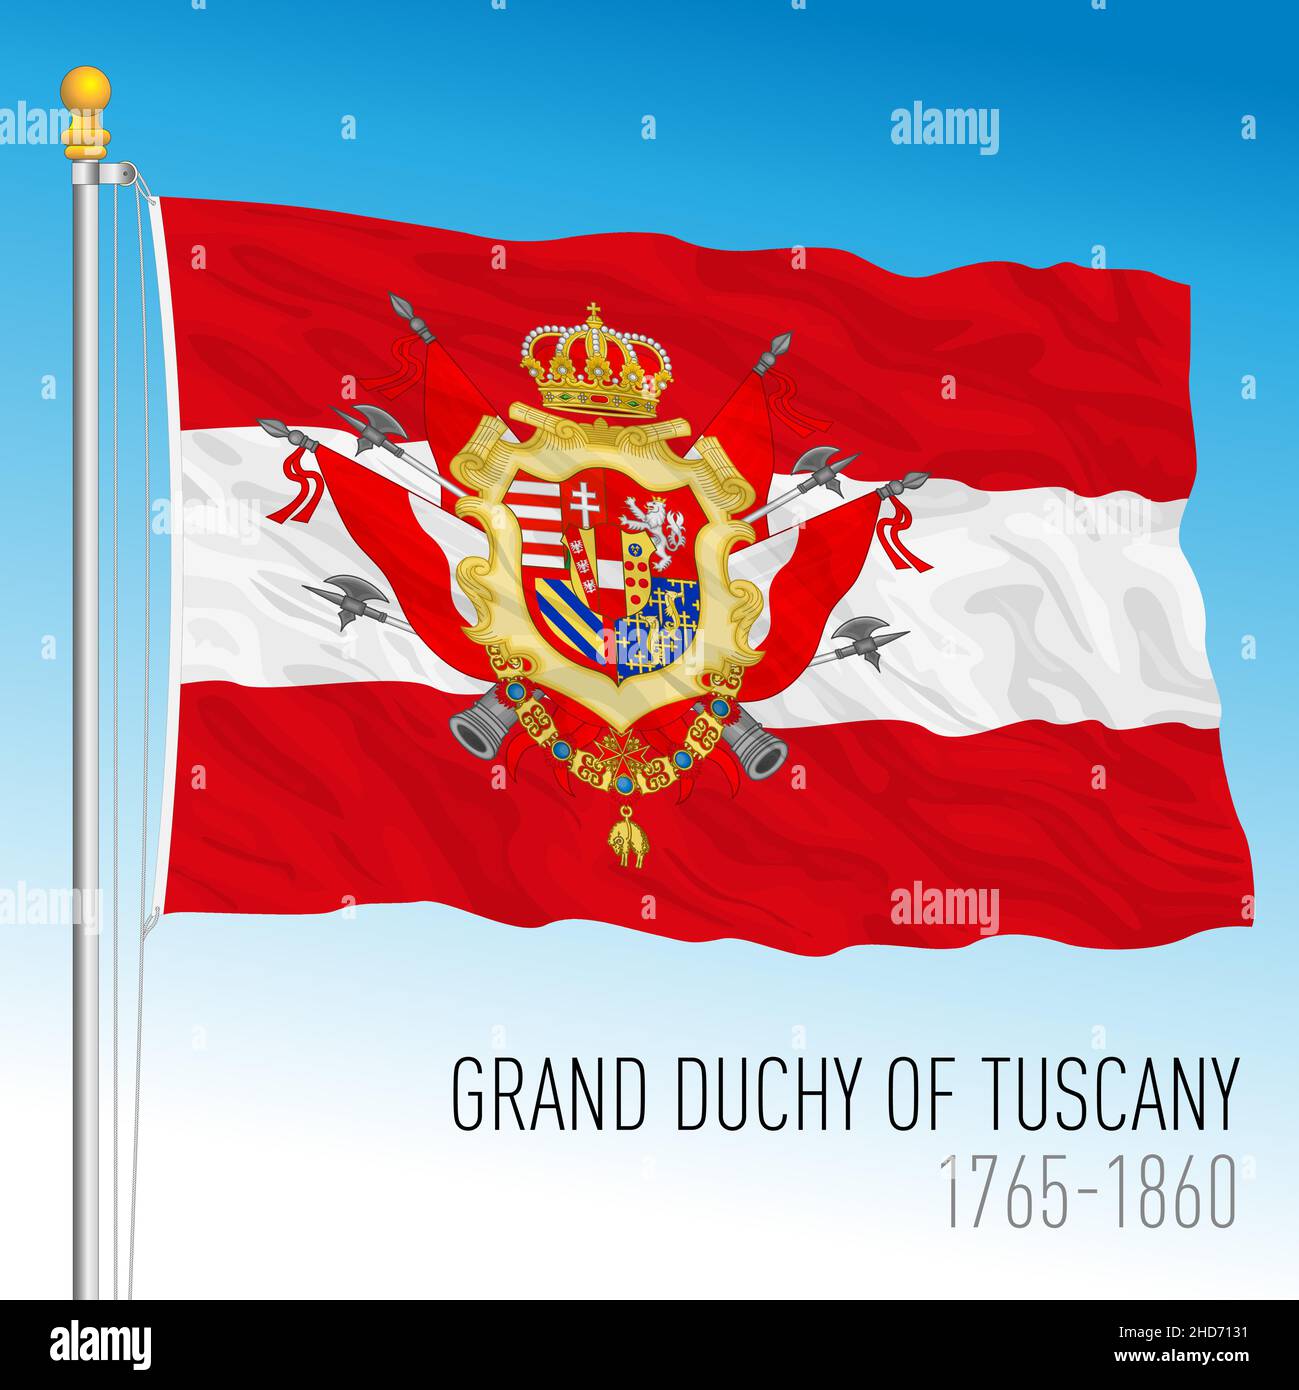 Großherzogtum Toskana historische Flagge, Toskana, Italien, antikes präunitäres Land, 1815 - 1860, vektorgrafik Stock Vektor